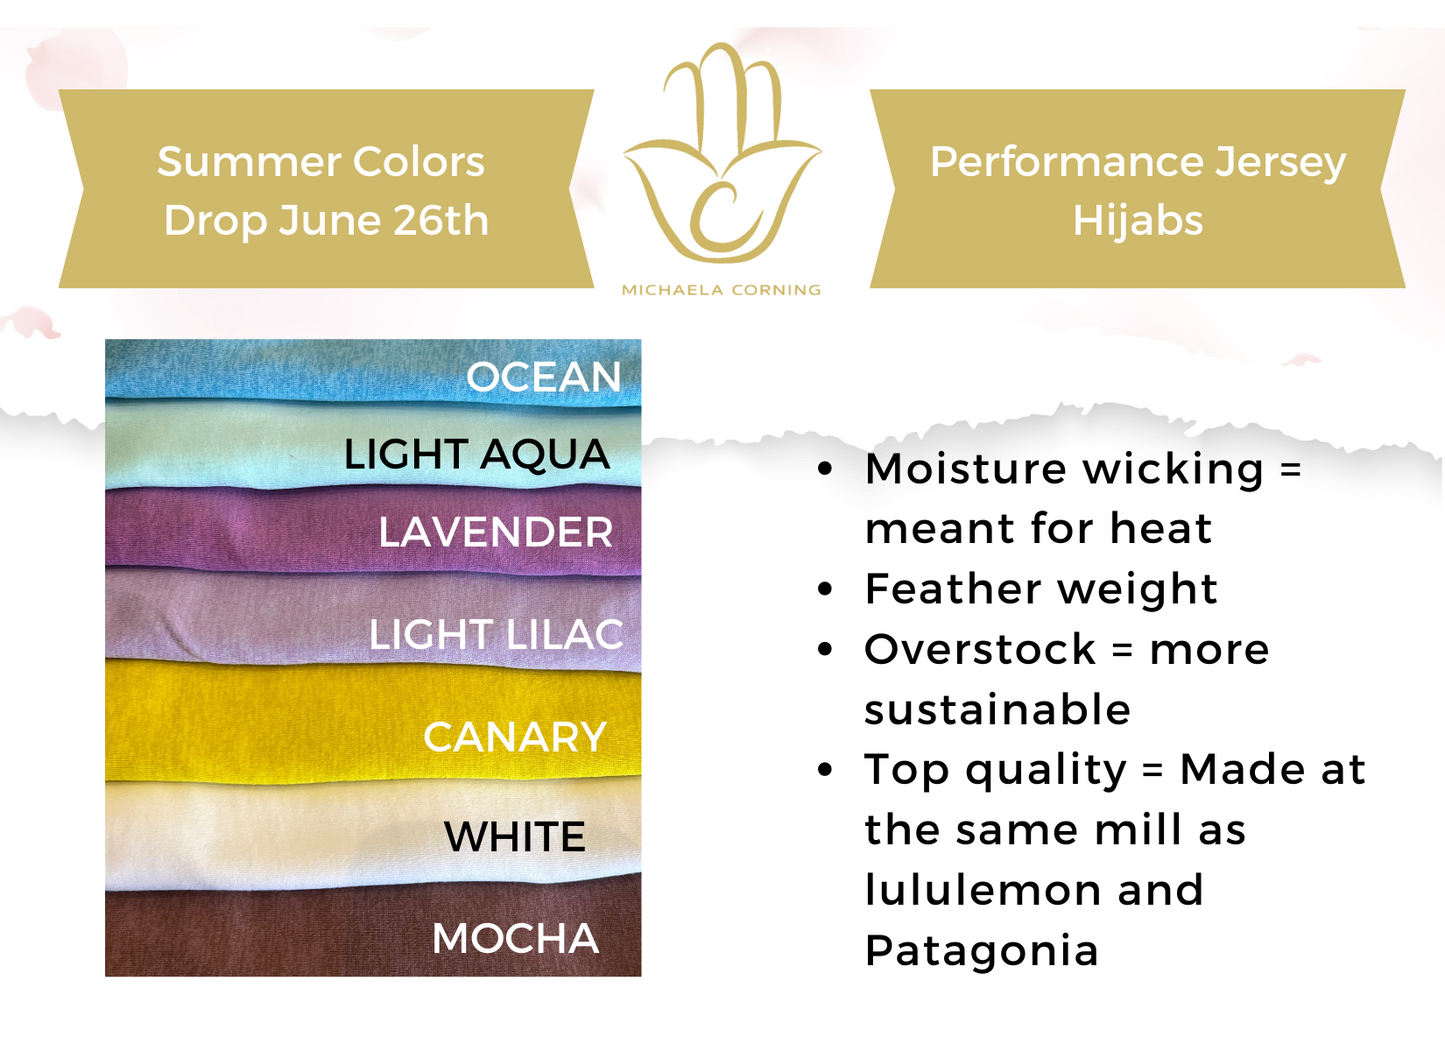 Performance Jersey Hijab: Light Lilac